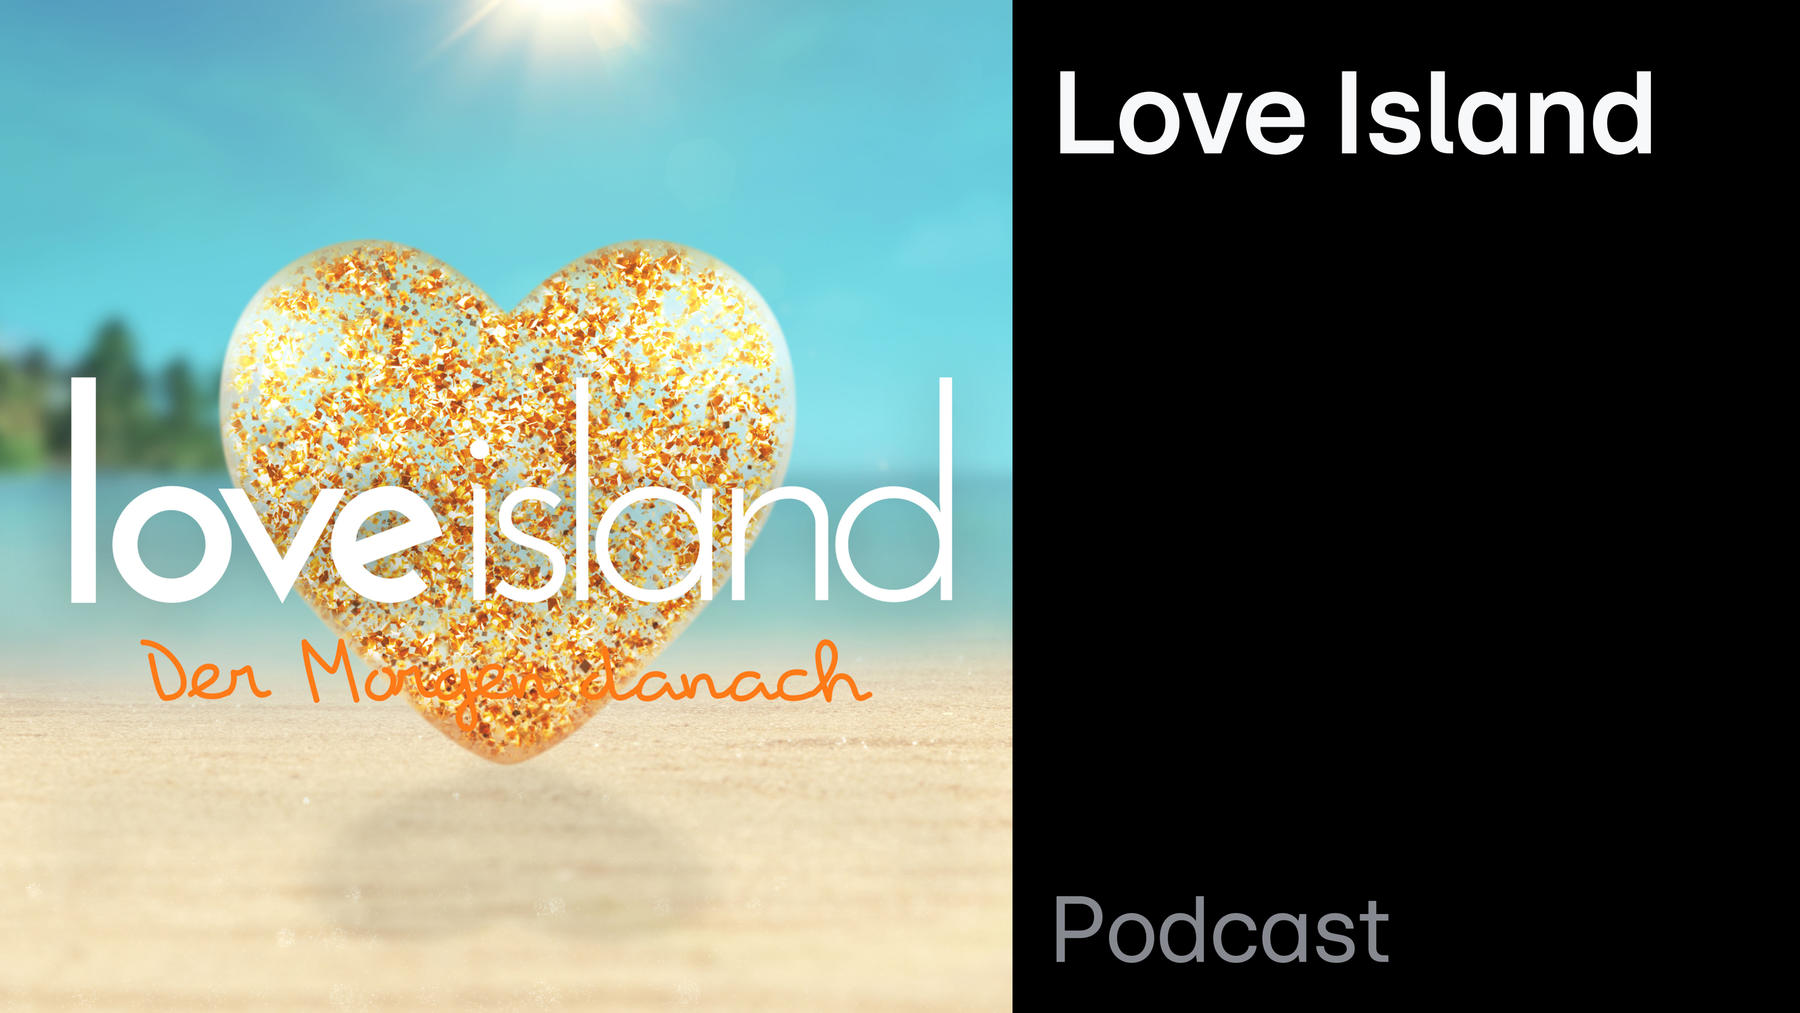 Podcast: Love Island